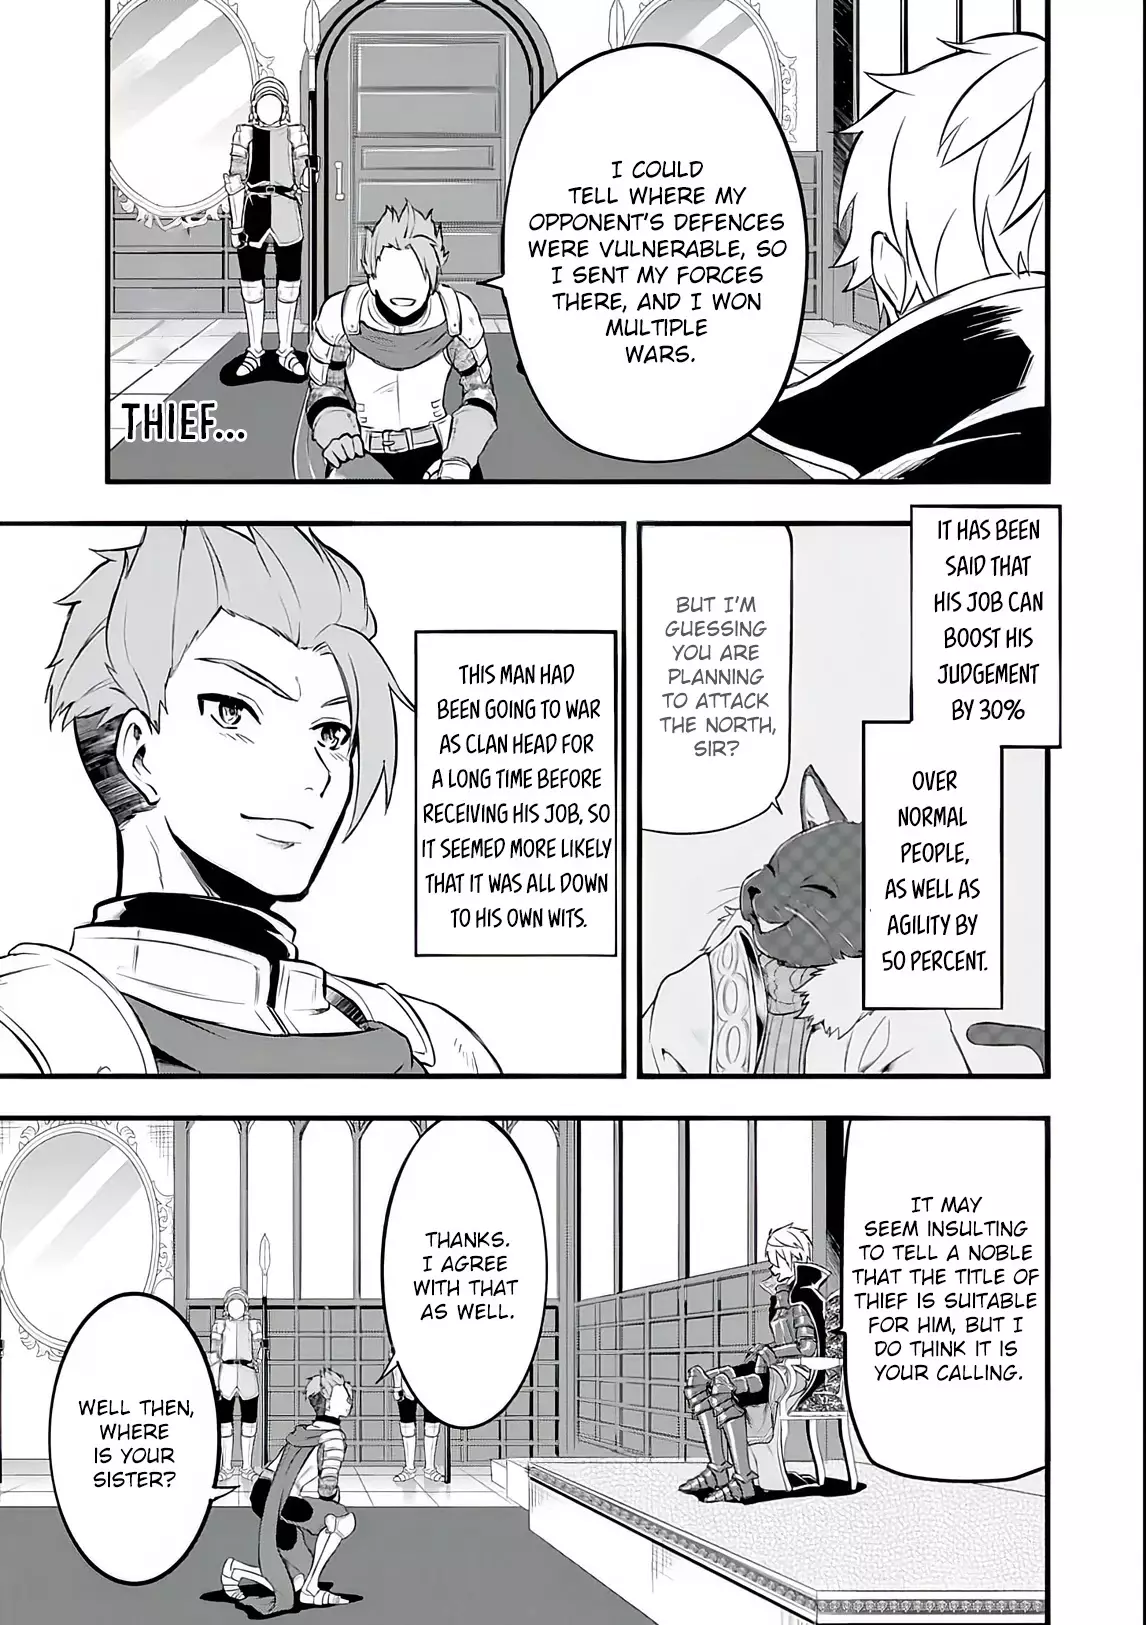 Mysterious Job Called Oda Nobunaga - 11 page 13-d71e2034